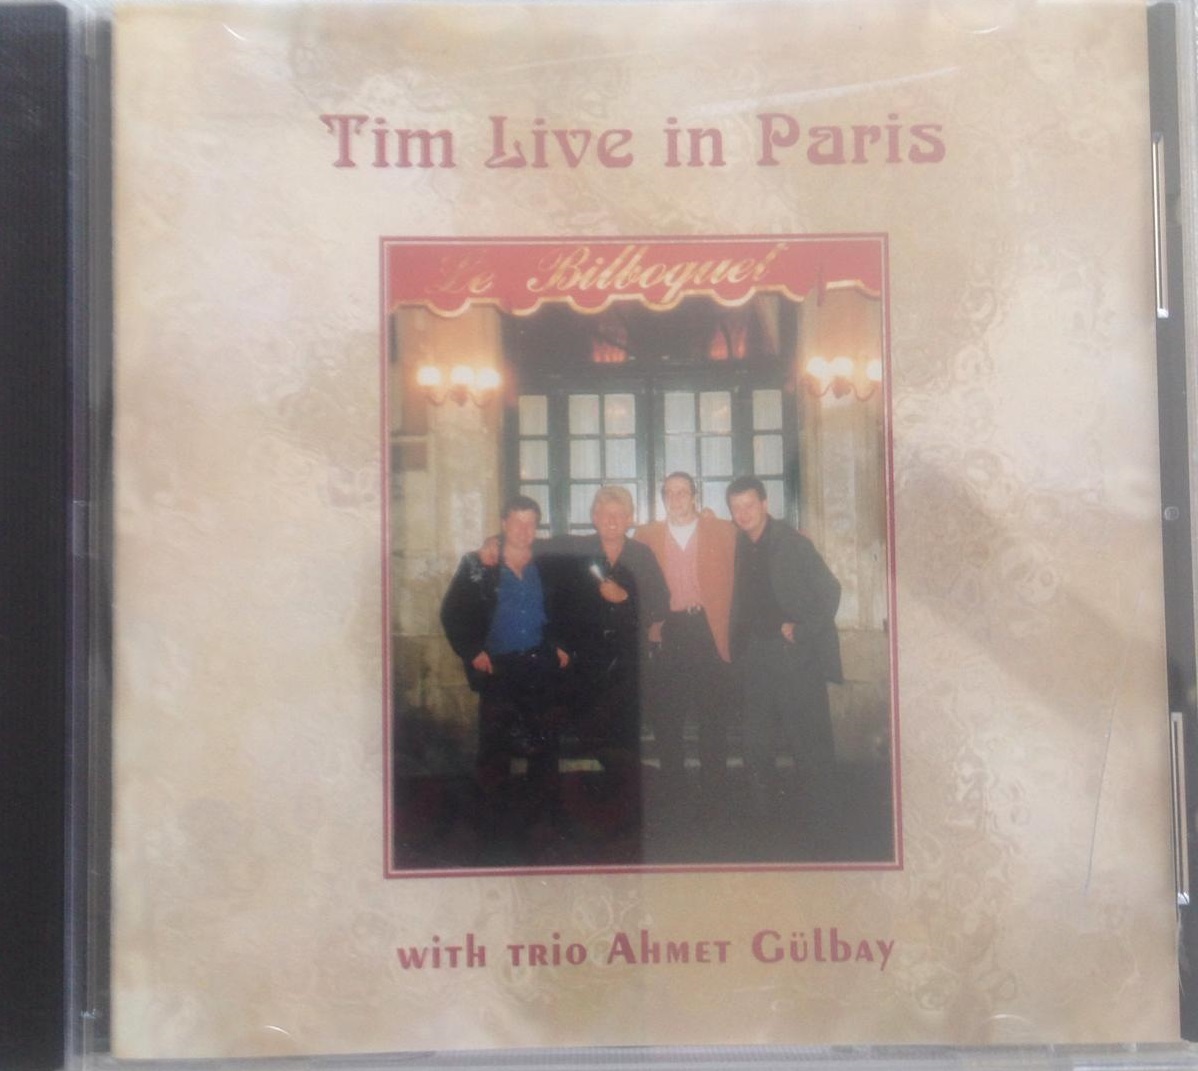 Ahmet Gülbay Trio Tim Live in Paris